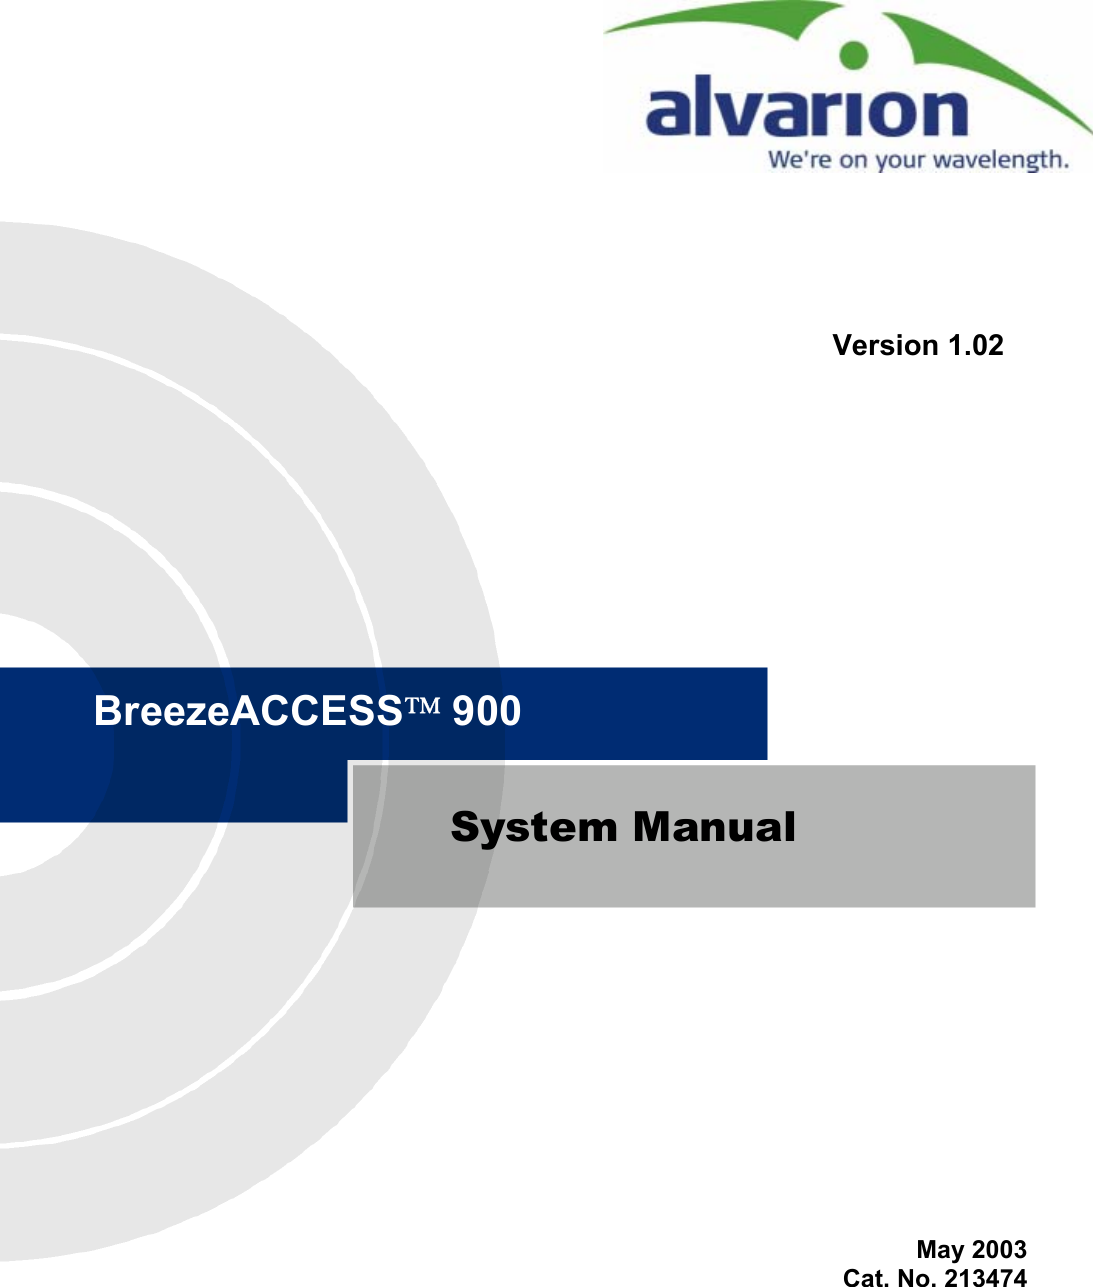  Version 1.02         BreezeACCESS 900System Manual May 2003Cat. No. 213474 